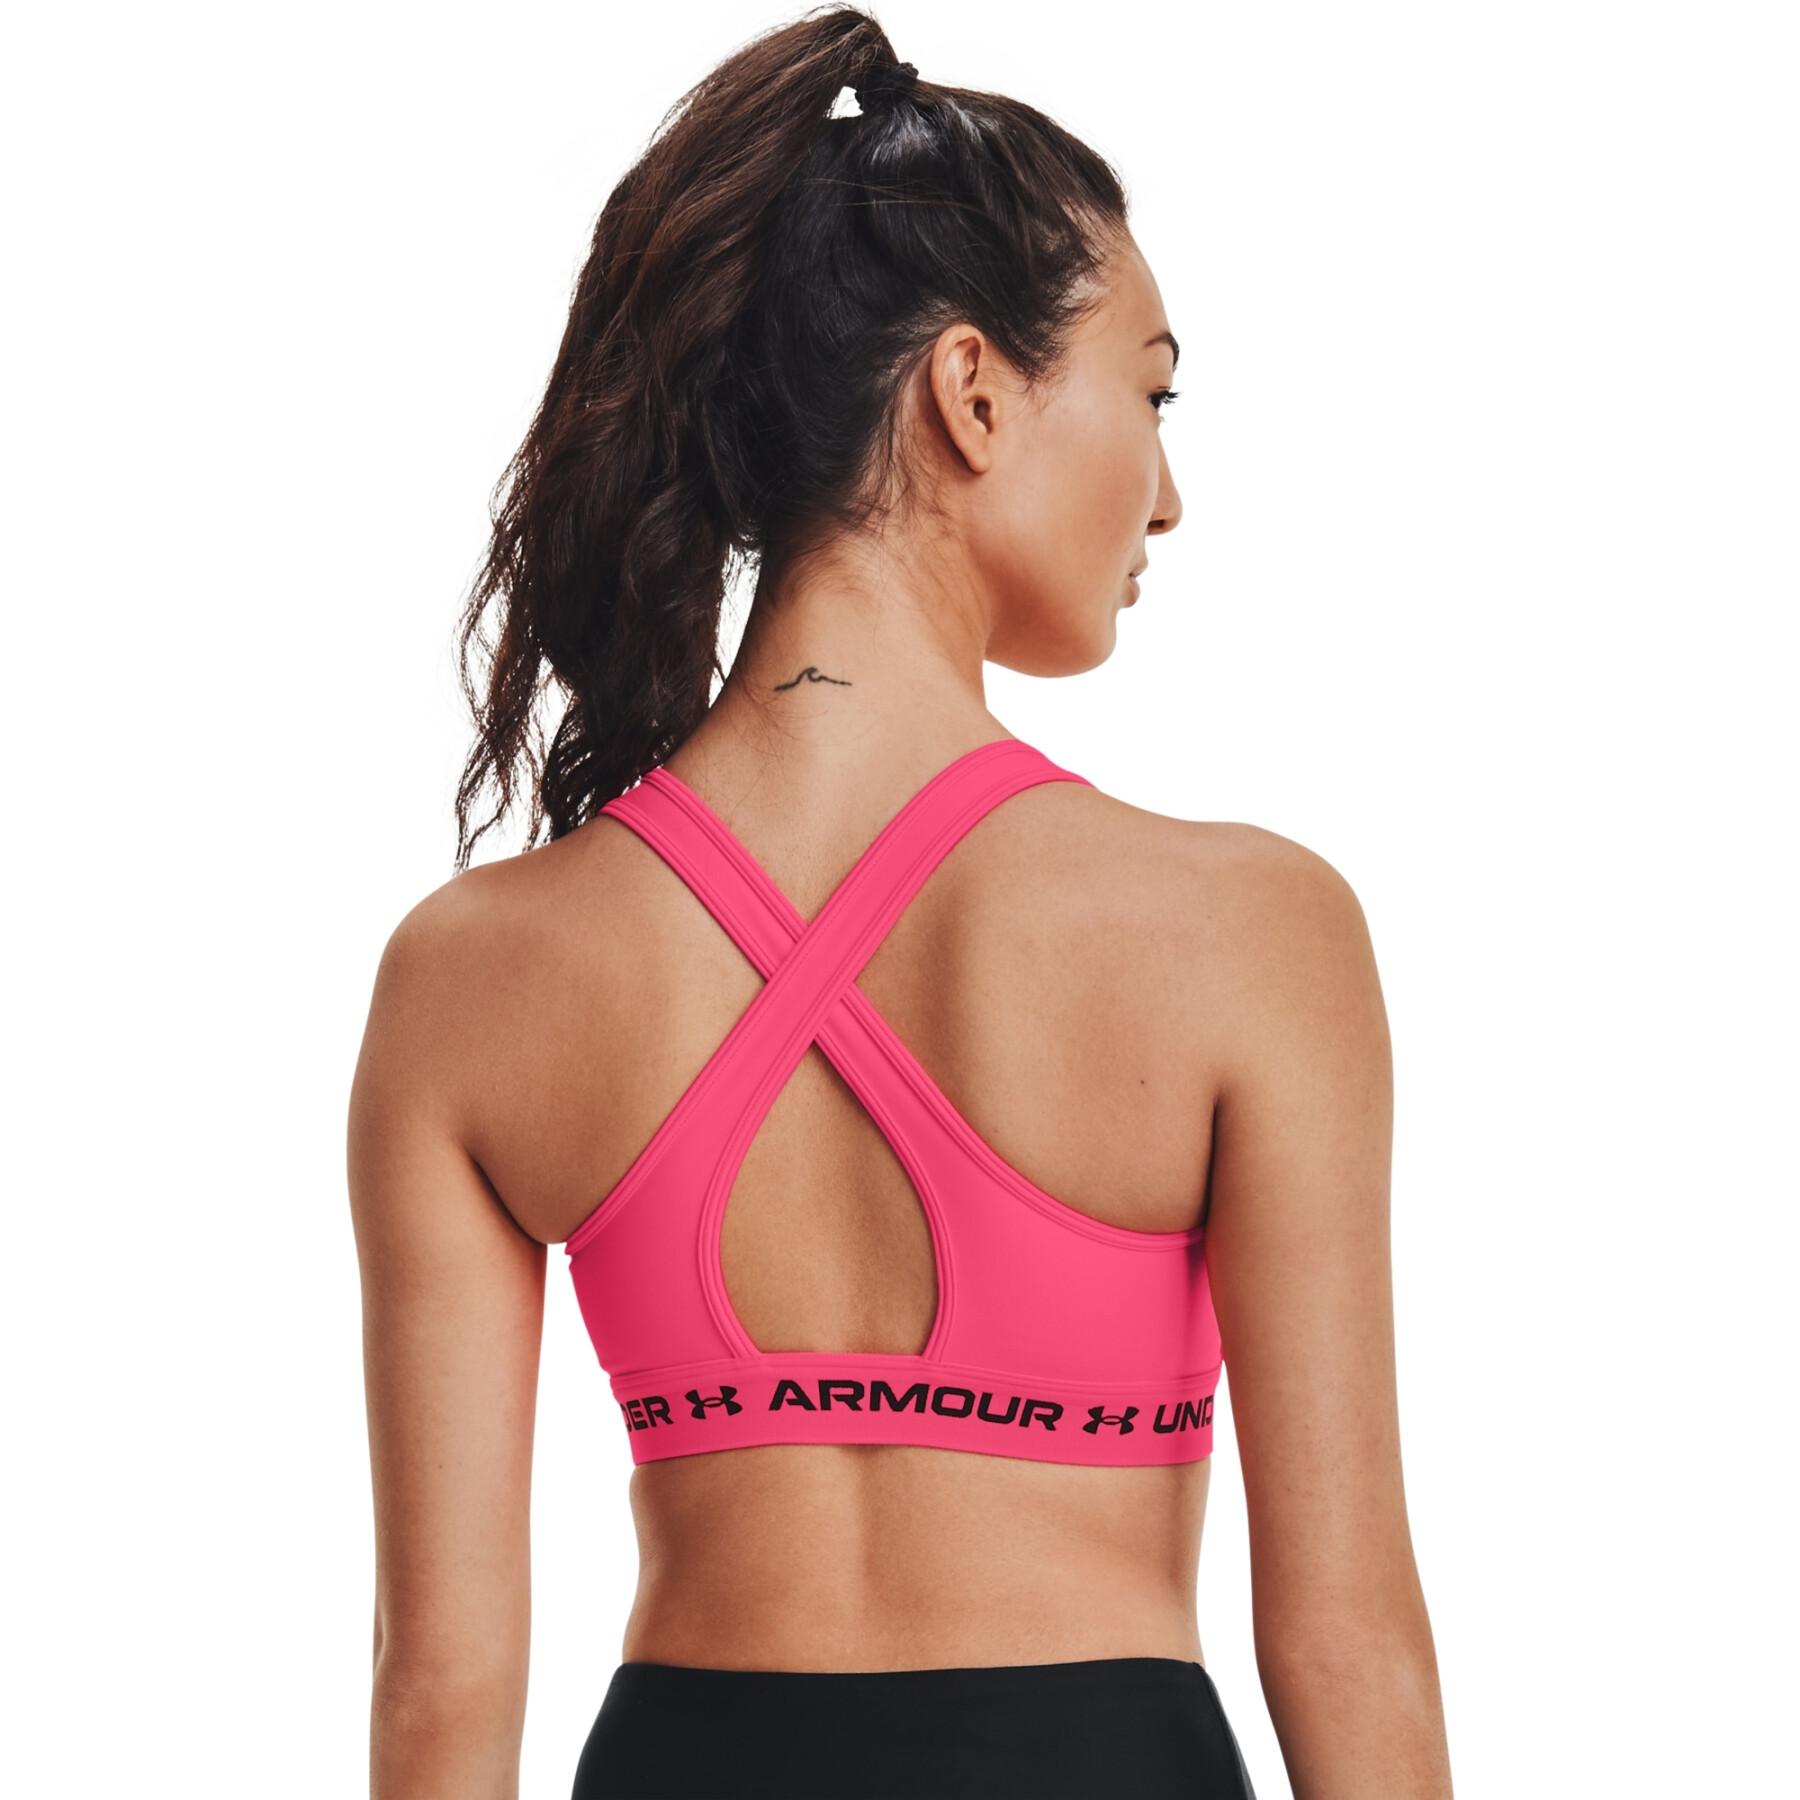 Women's moderate support sports bra Under Armour® Crossback - Slocog wear -  Under Armour Embiid 2 - Sports bras - Women's wear